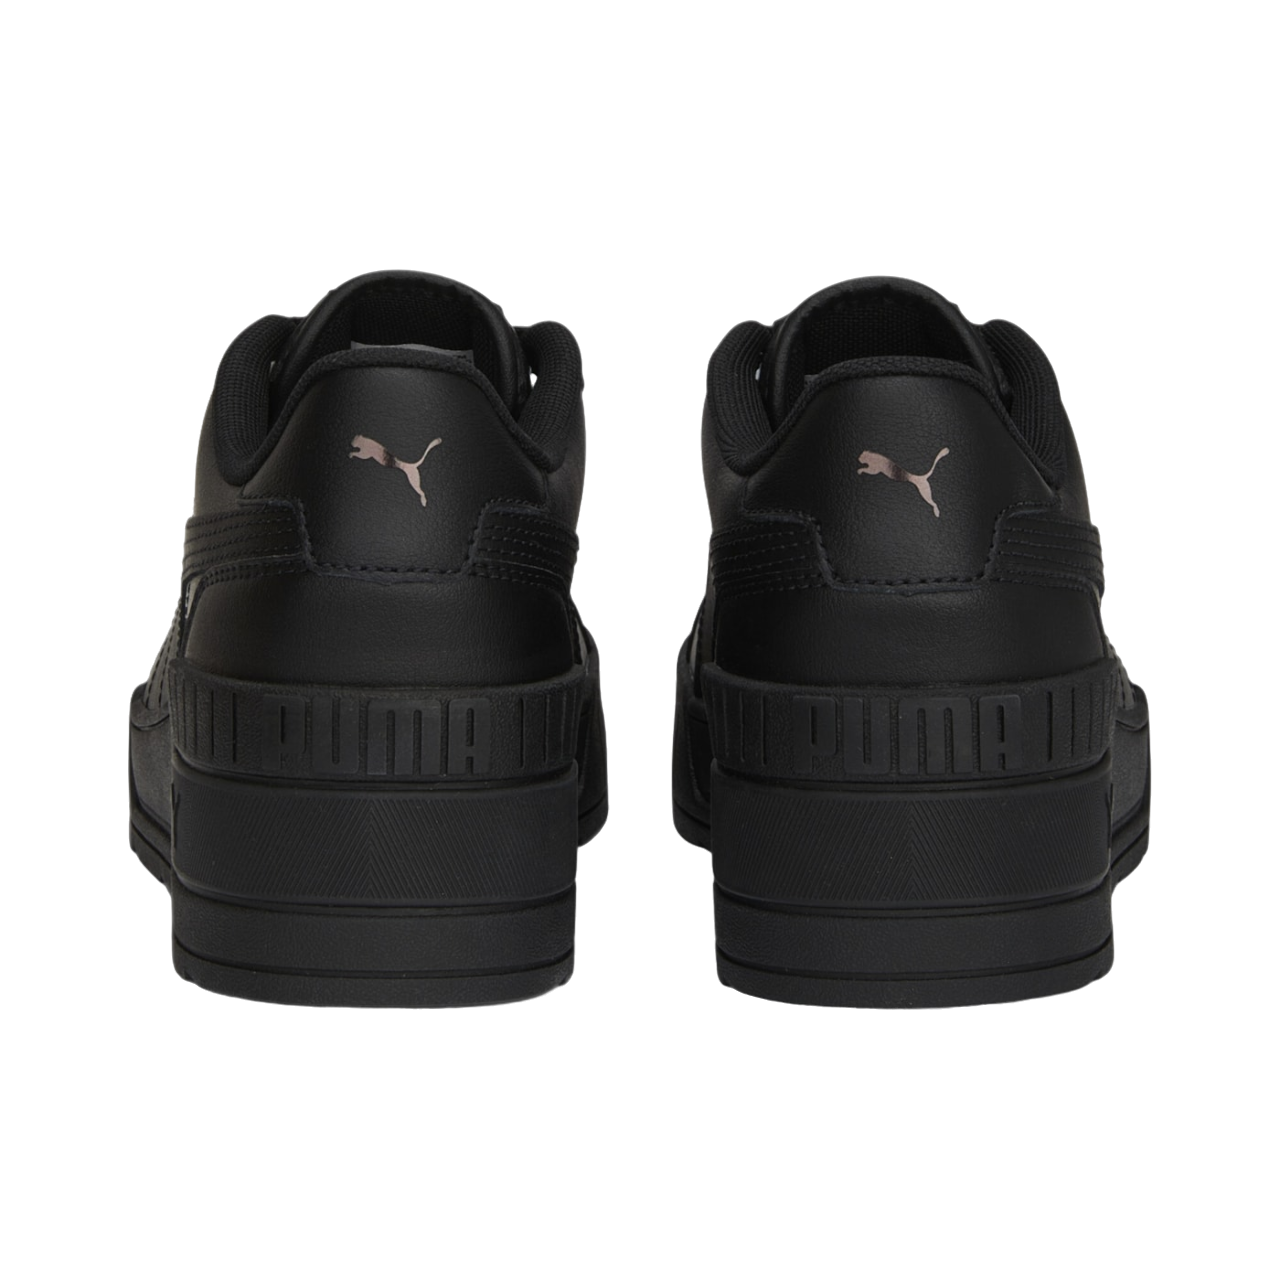 Puma scarpa sneakers da donna Karmen Wedge 390985-03 nero